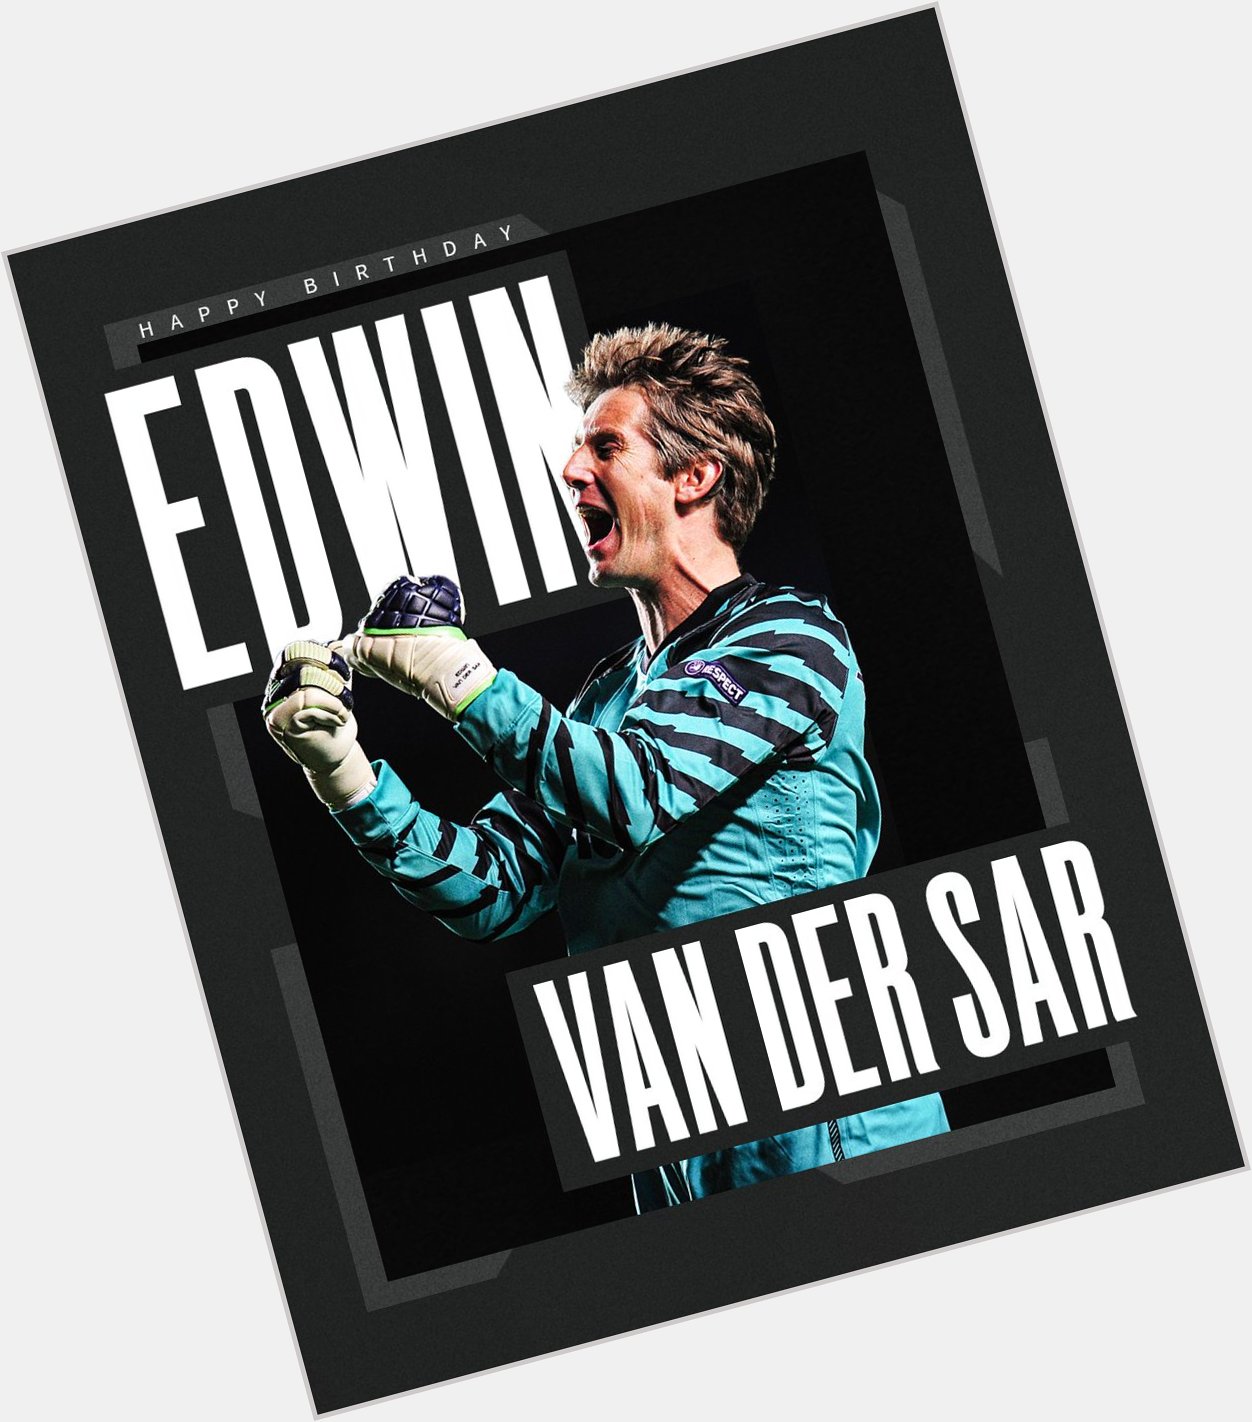            - Happy birthday Edwin Van der Sar 